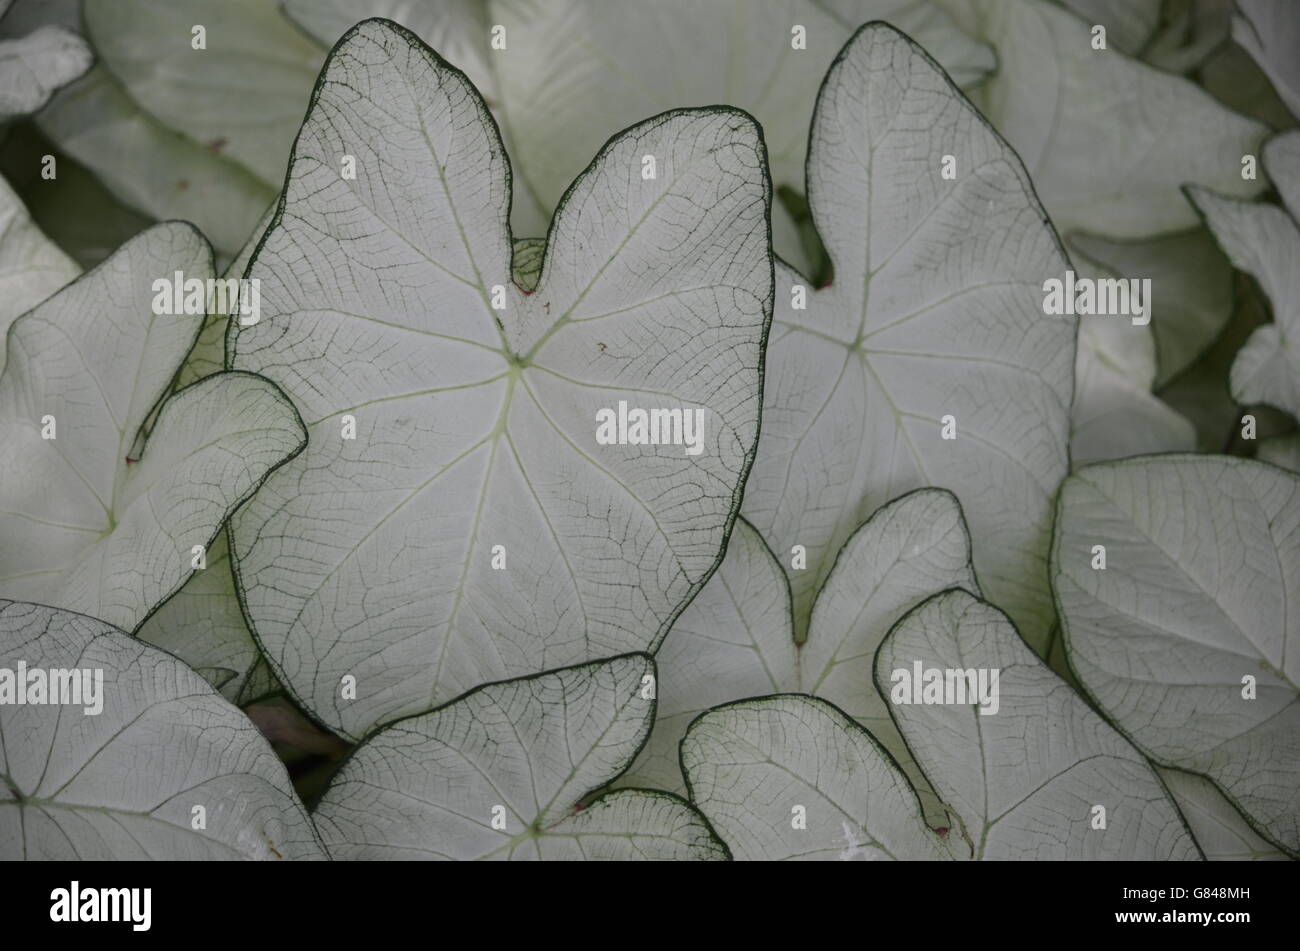 Heart Shaped Green and White Caladium (caladium x hortulanum) Stock Photo